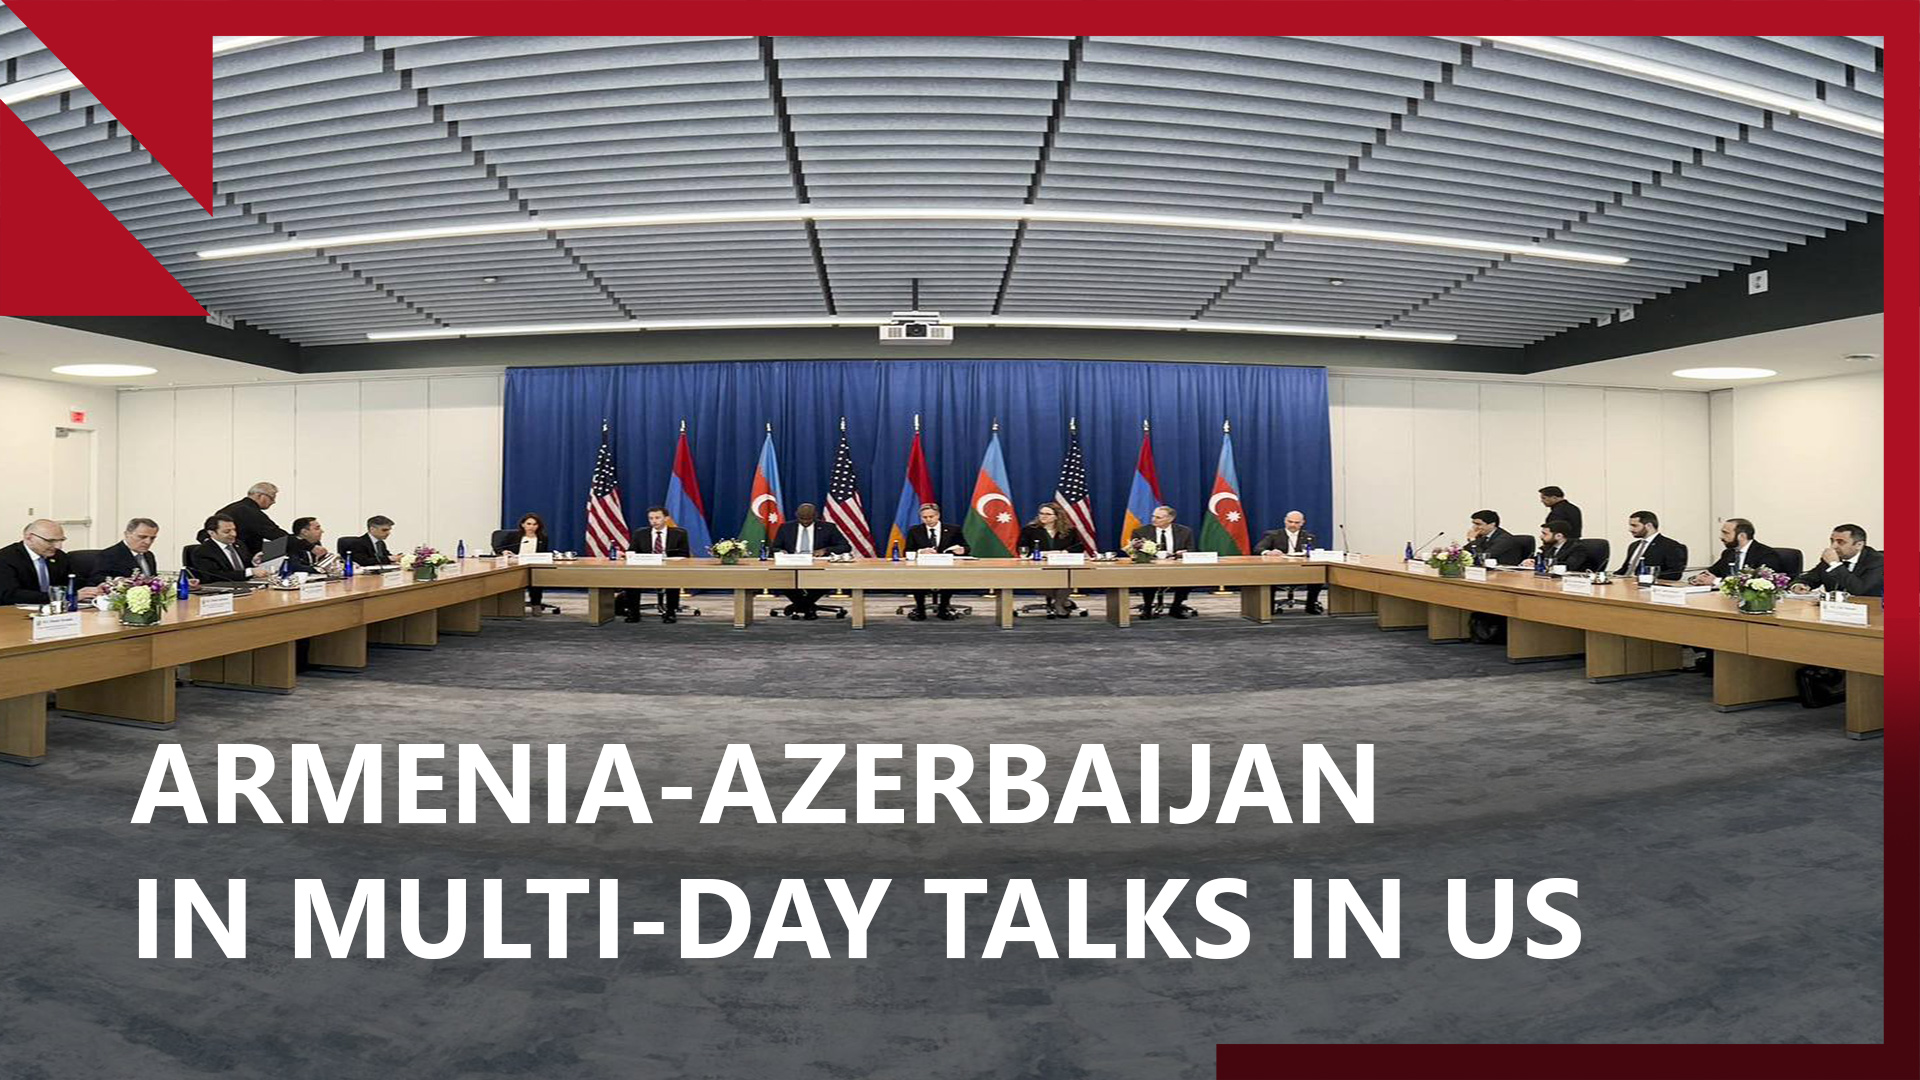 Armenia has ‘highest expectations’ for Washington talks with Azerbaijan, says lawmaker